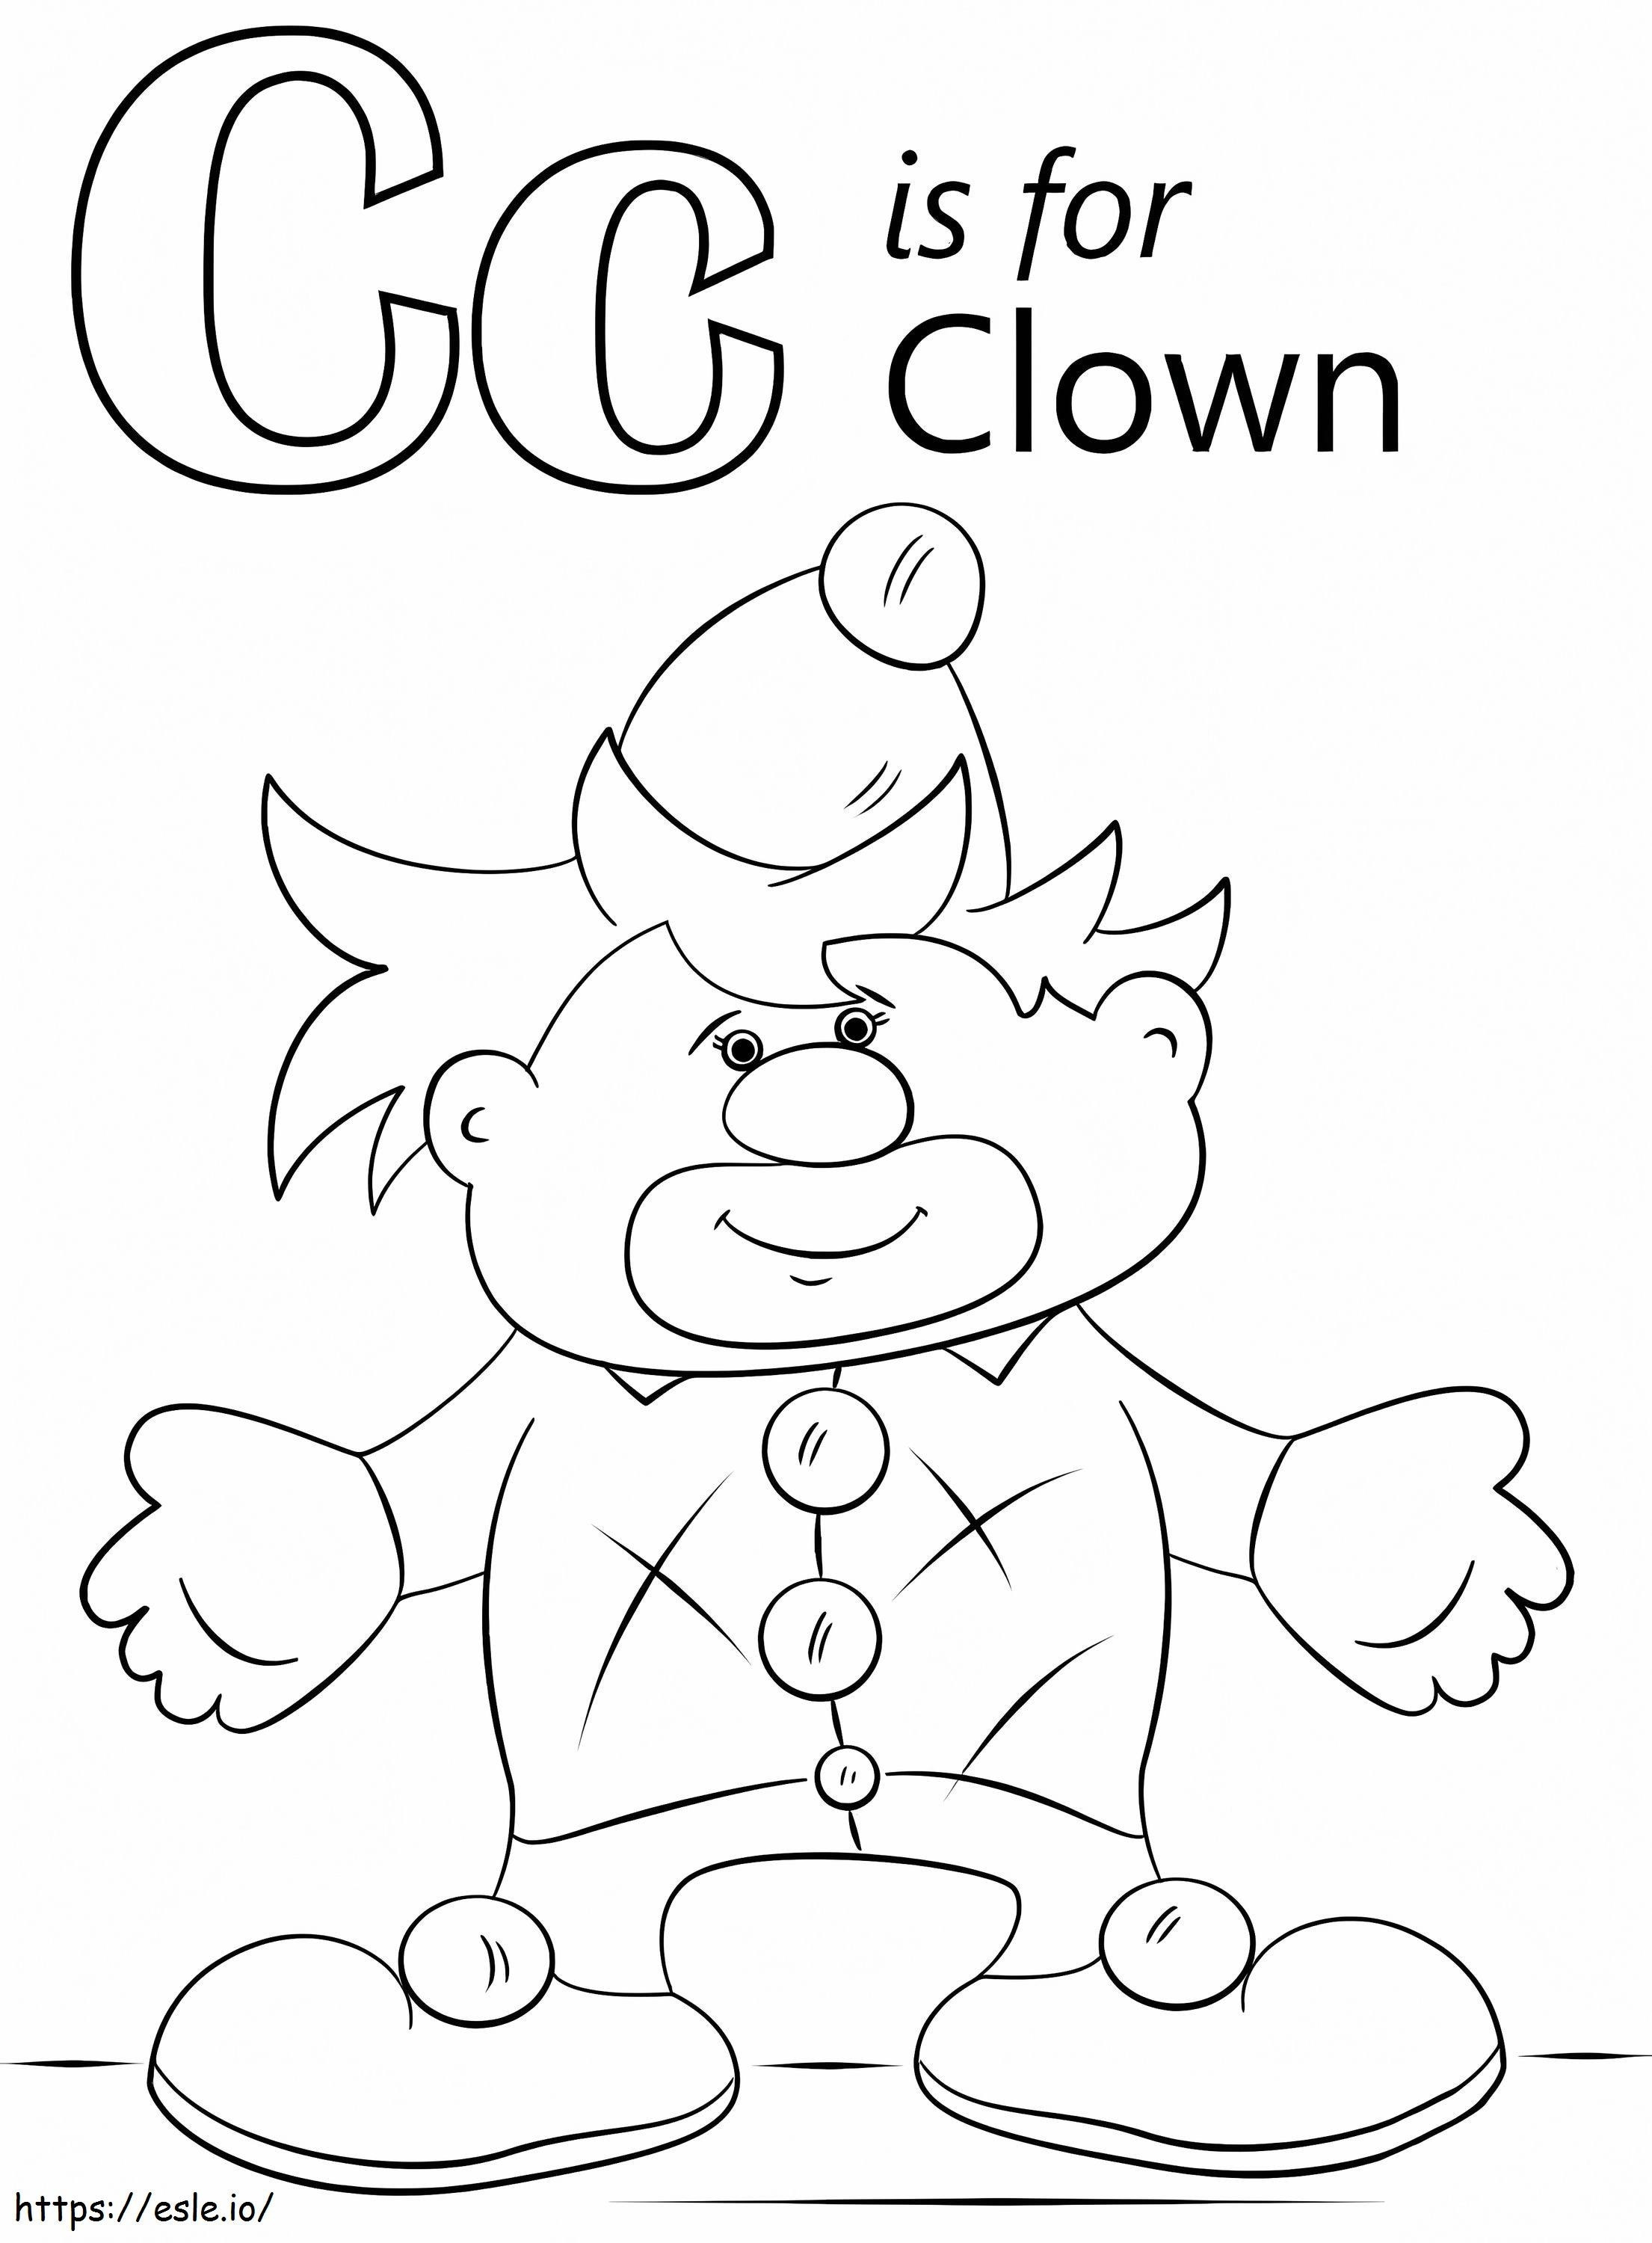 Clown Letter C coloring page